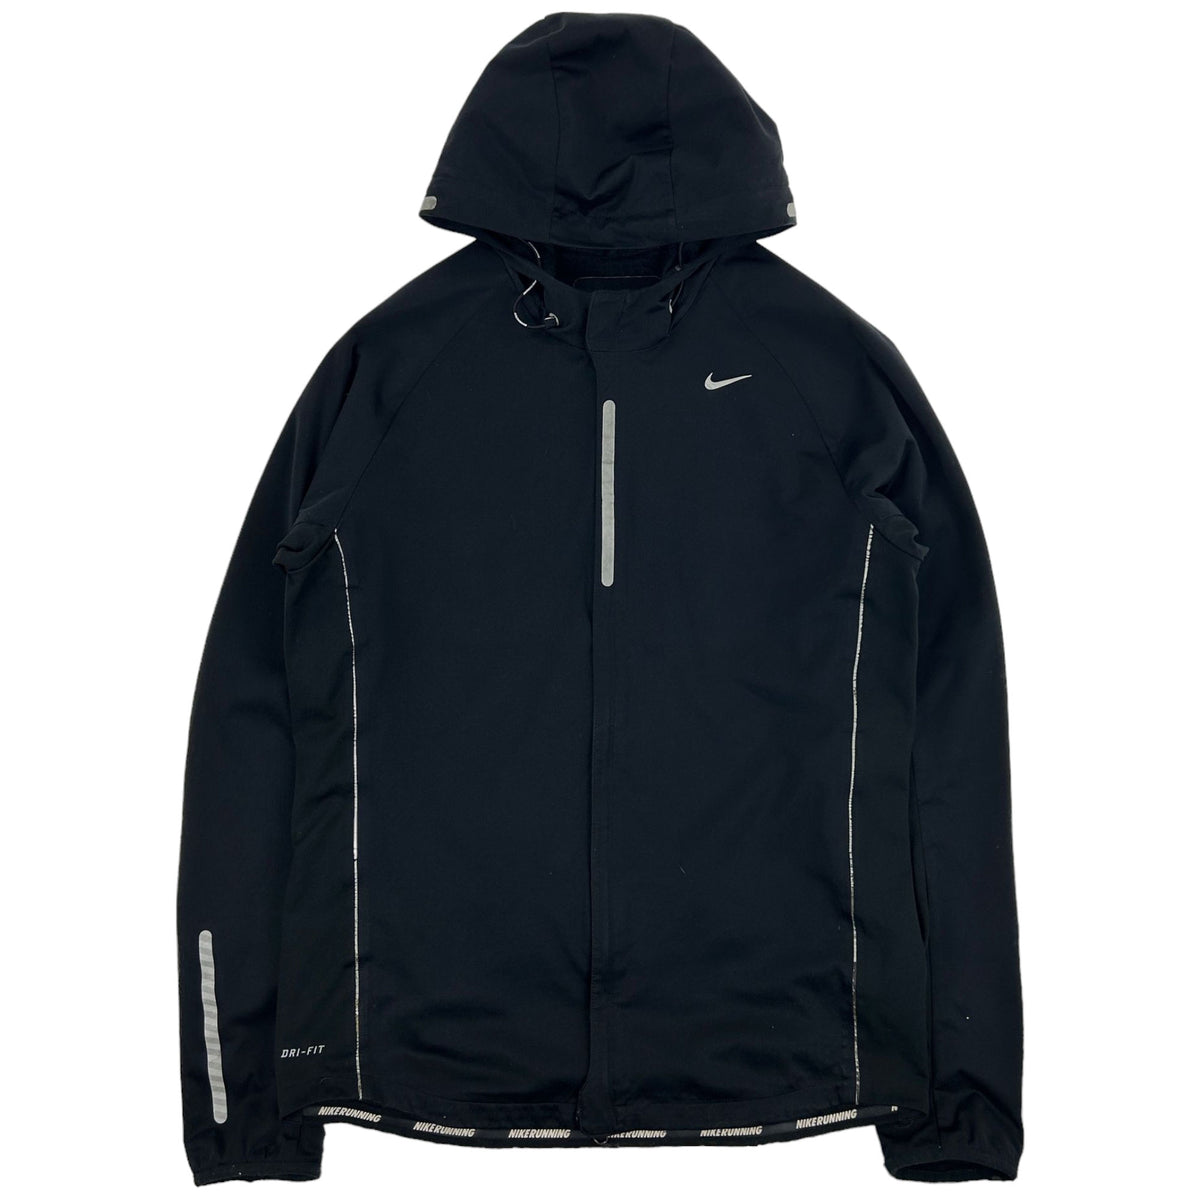 Nike Dri-Fit Running Zip Up Jacket Size M